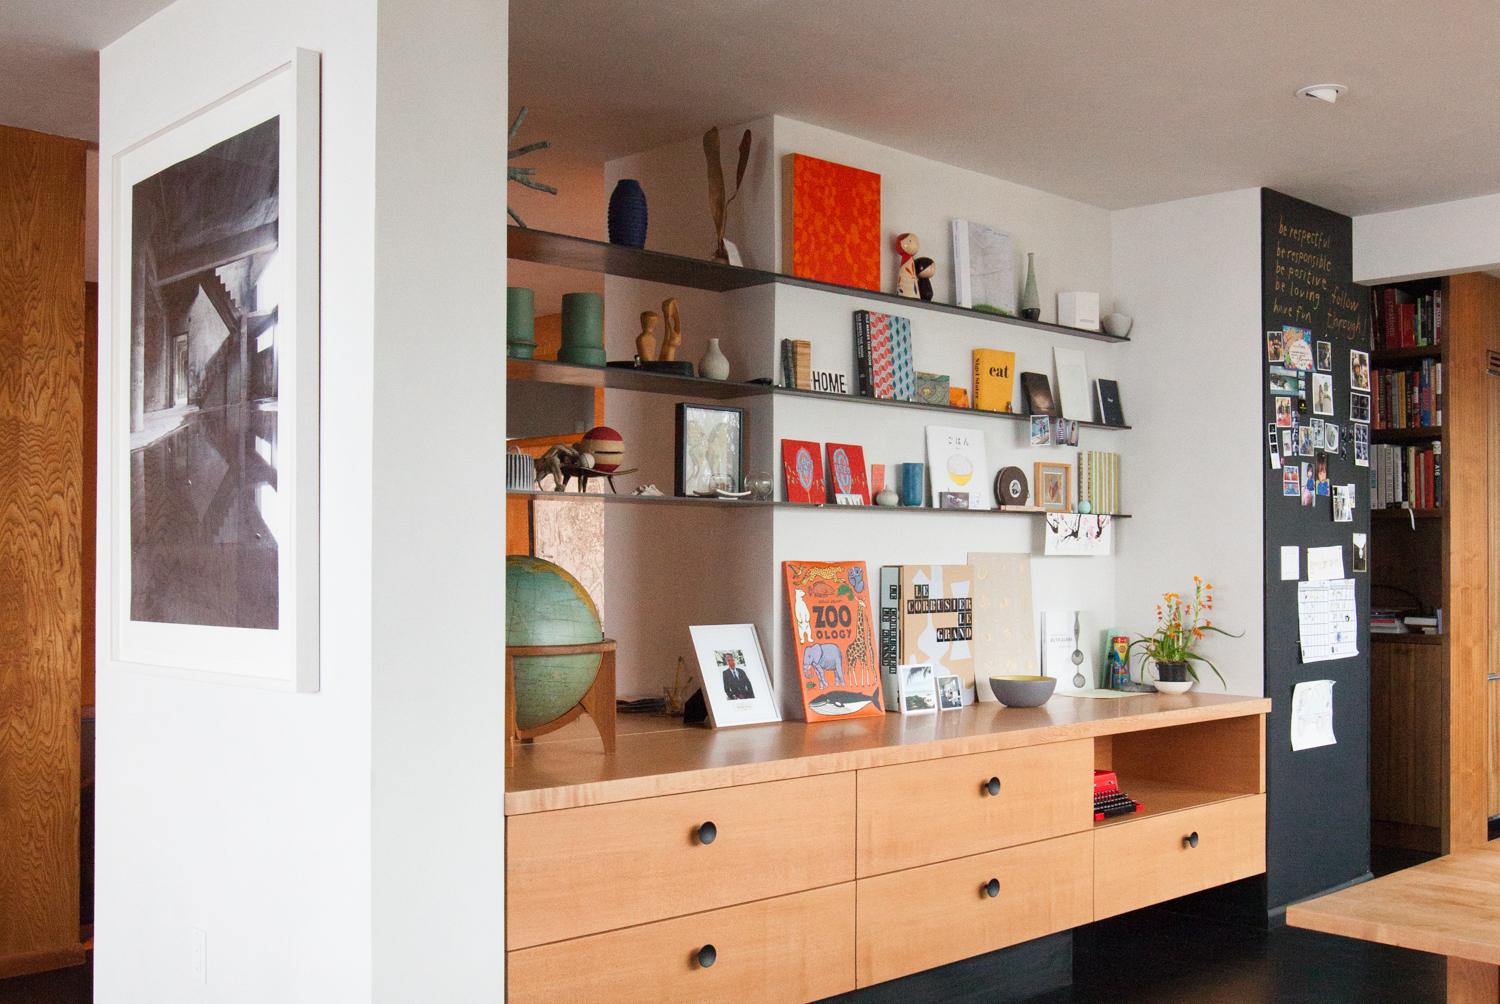 bookshelf and cabinets // Cragmont by Sky Lanigan for Medium Plenty